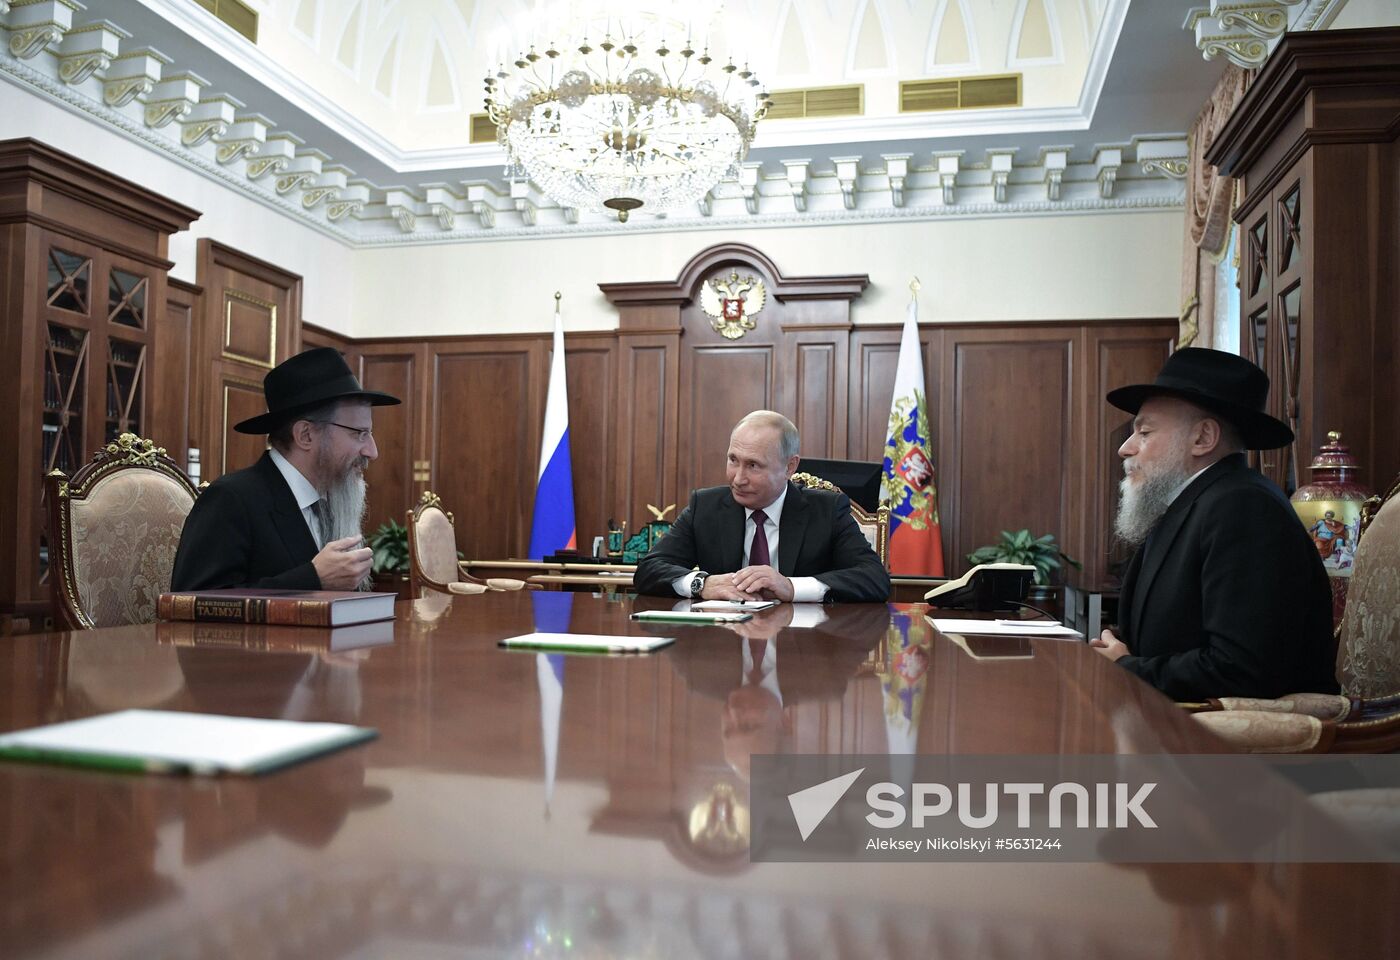 President Putin meets with Chief Rabbi of Russia Berel Lazar and President of the Federation of Jewish Communities Alexander Boroda